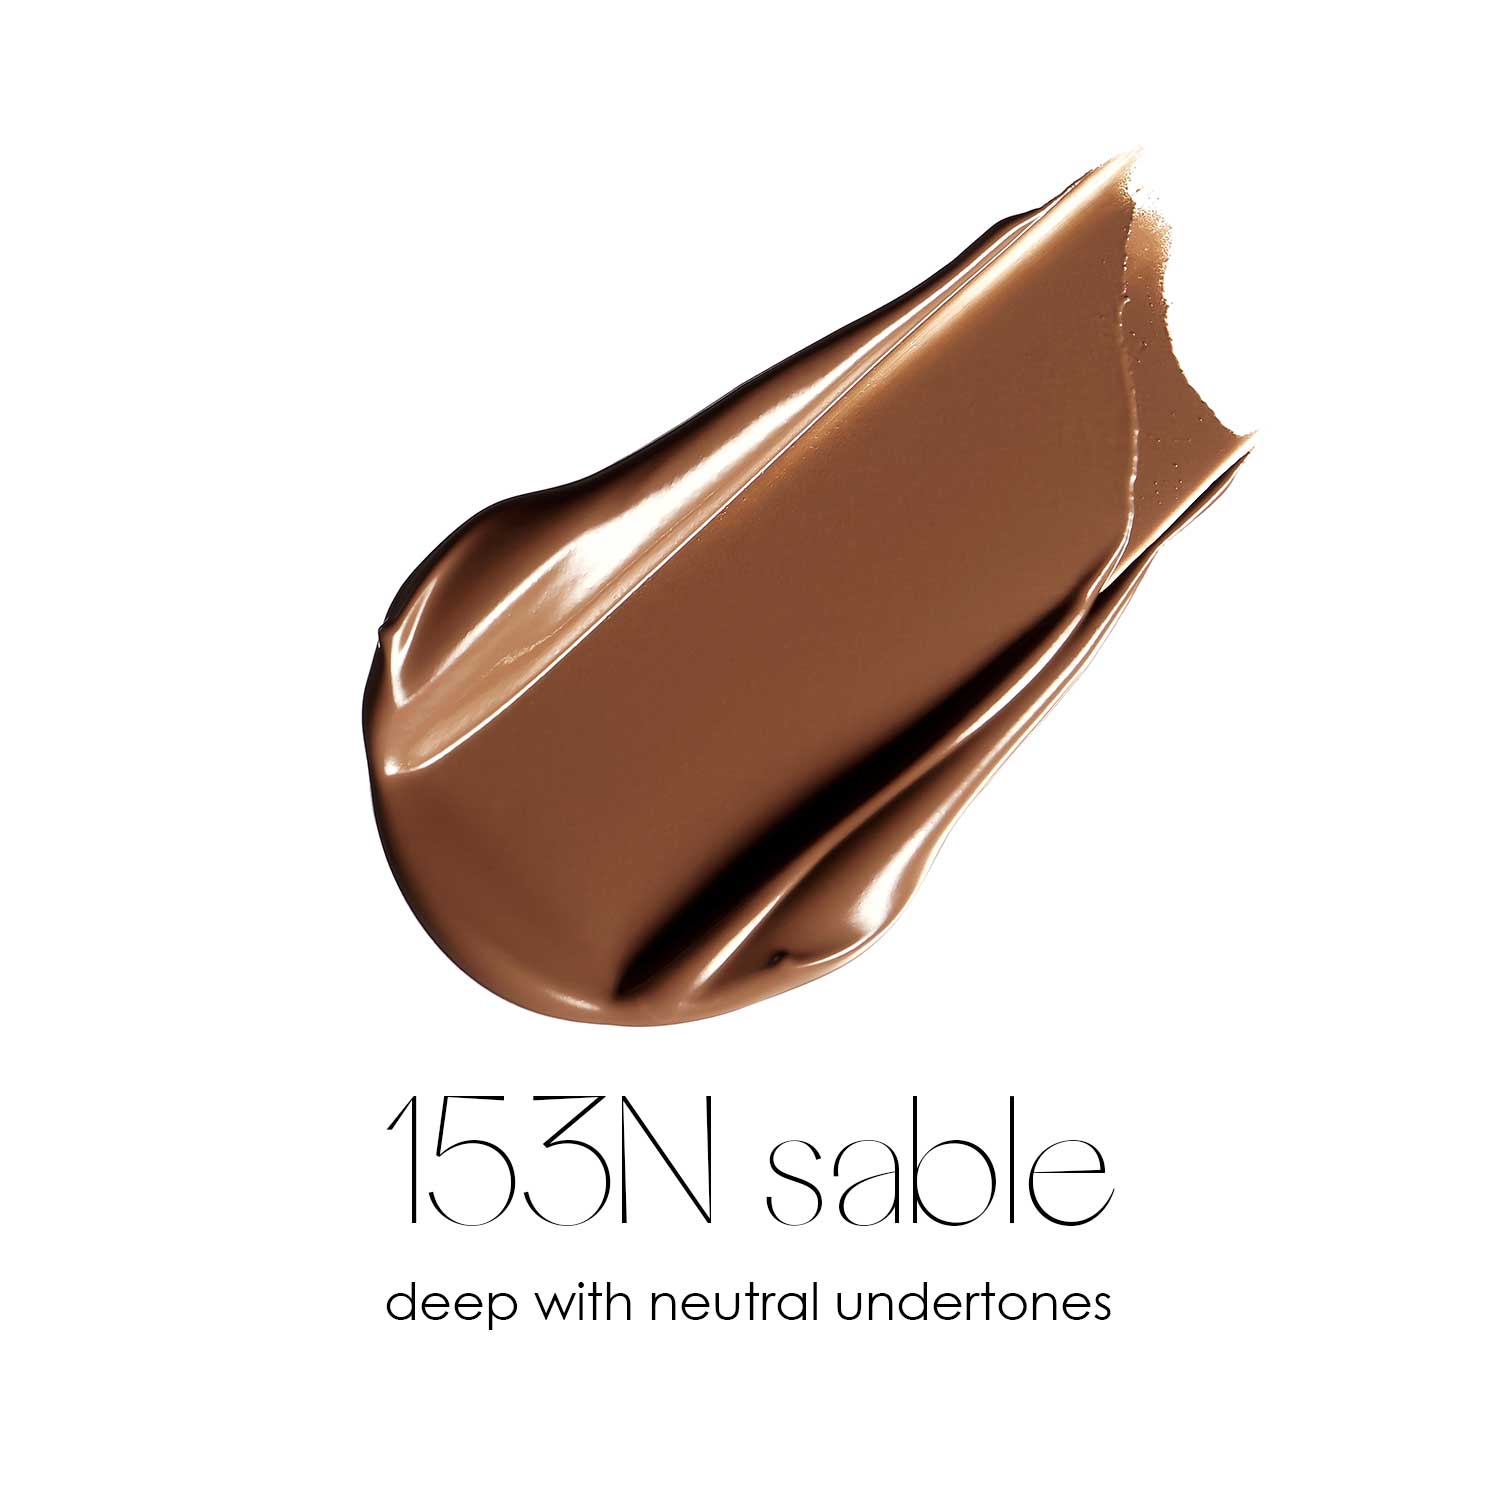 153N Sable - Deep with neutral undertones